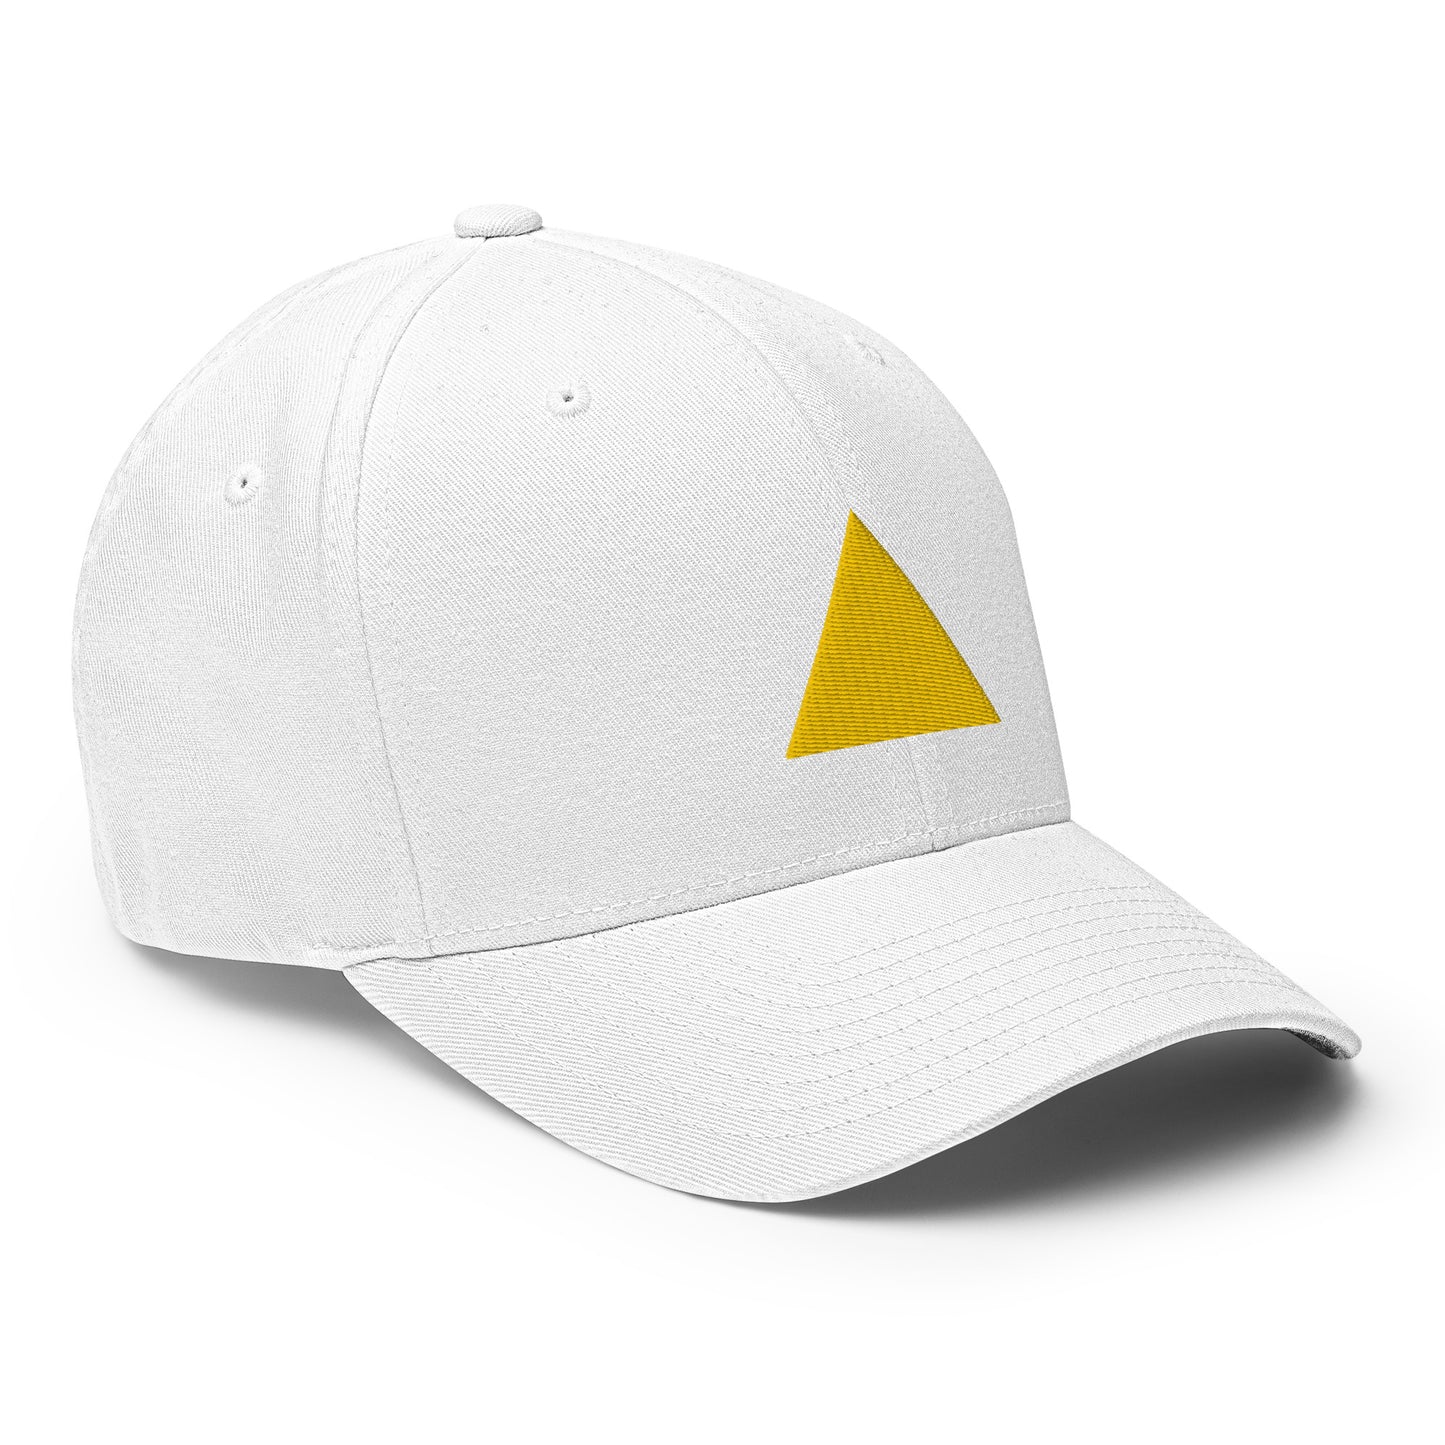 Baseball Cap with Triangle Symbol